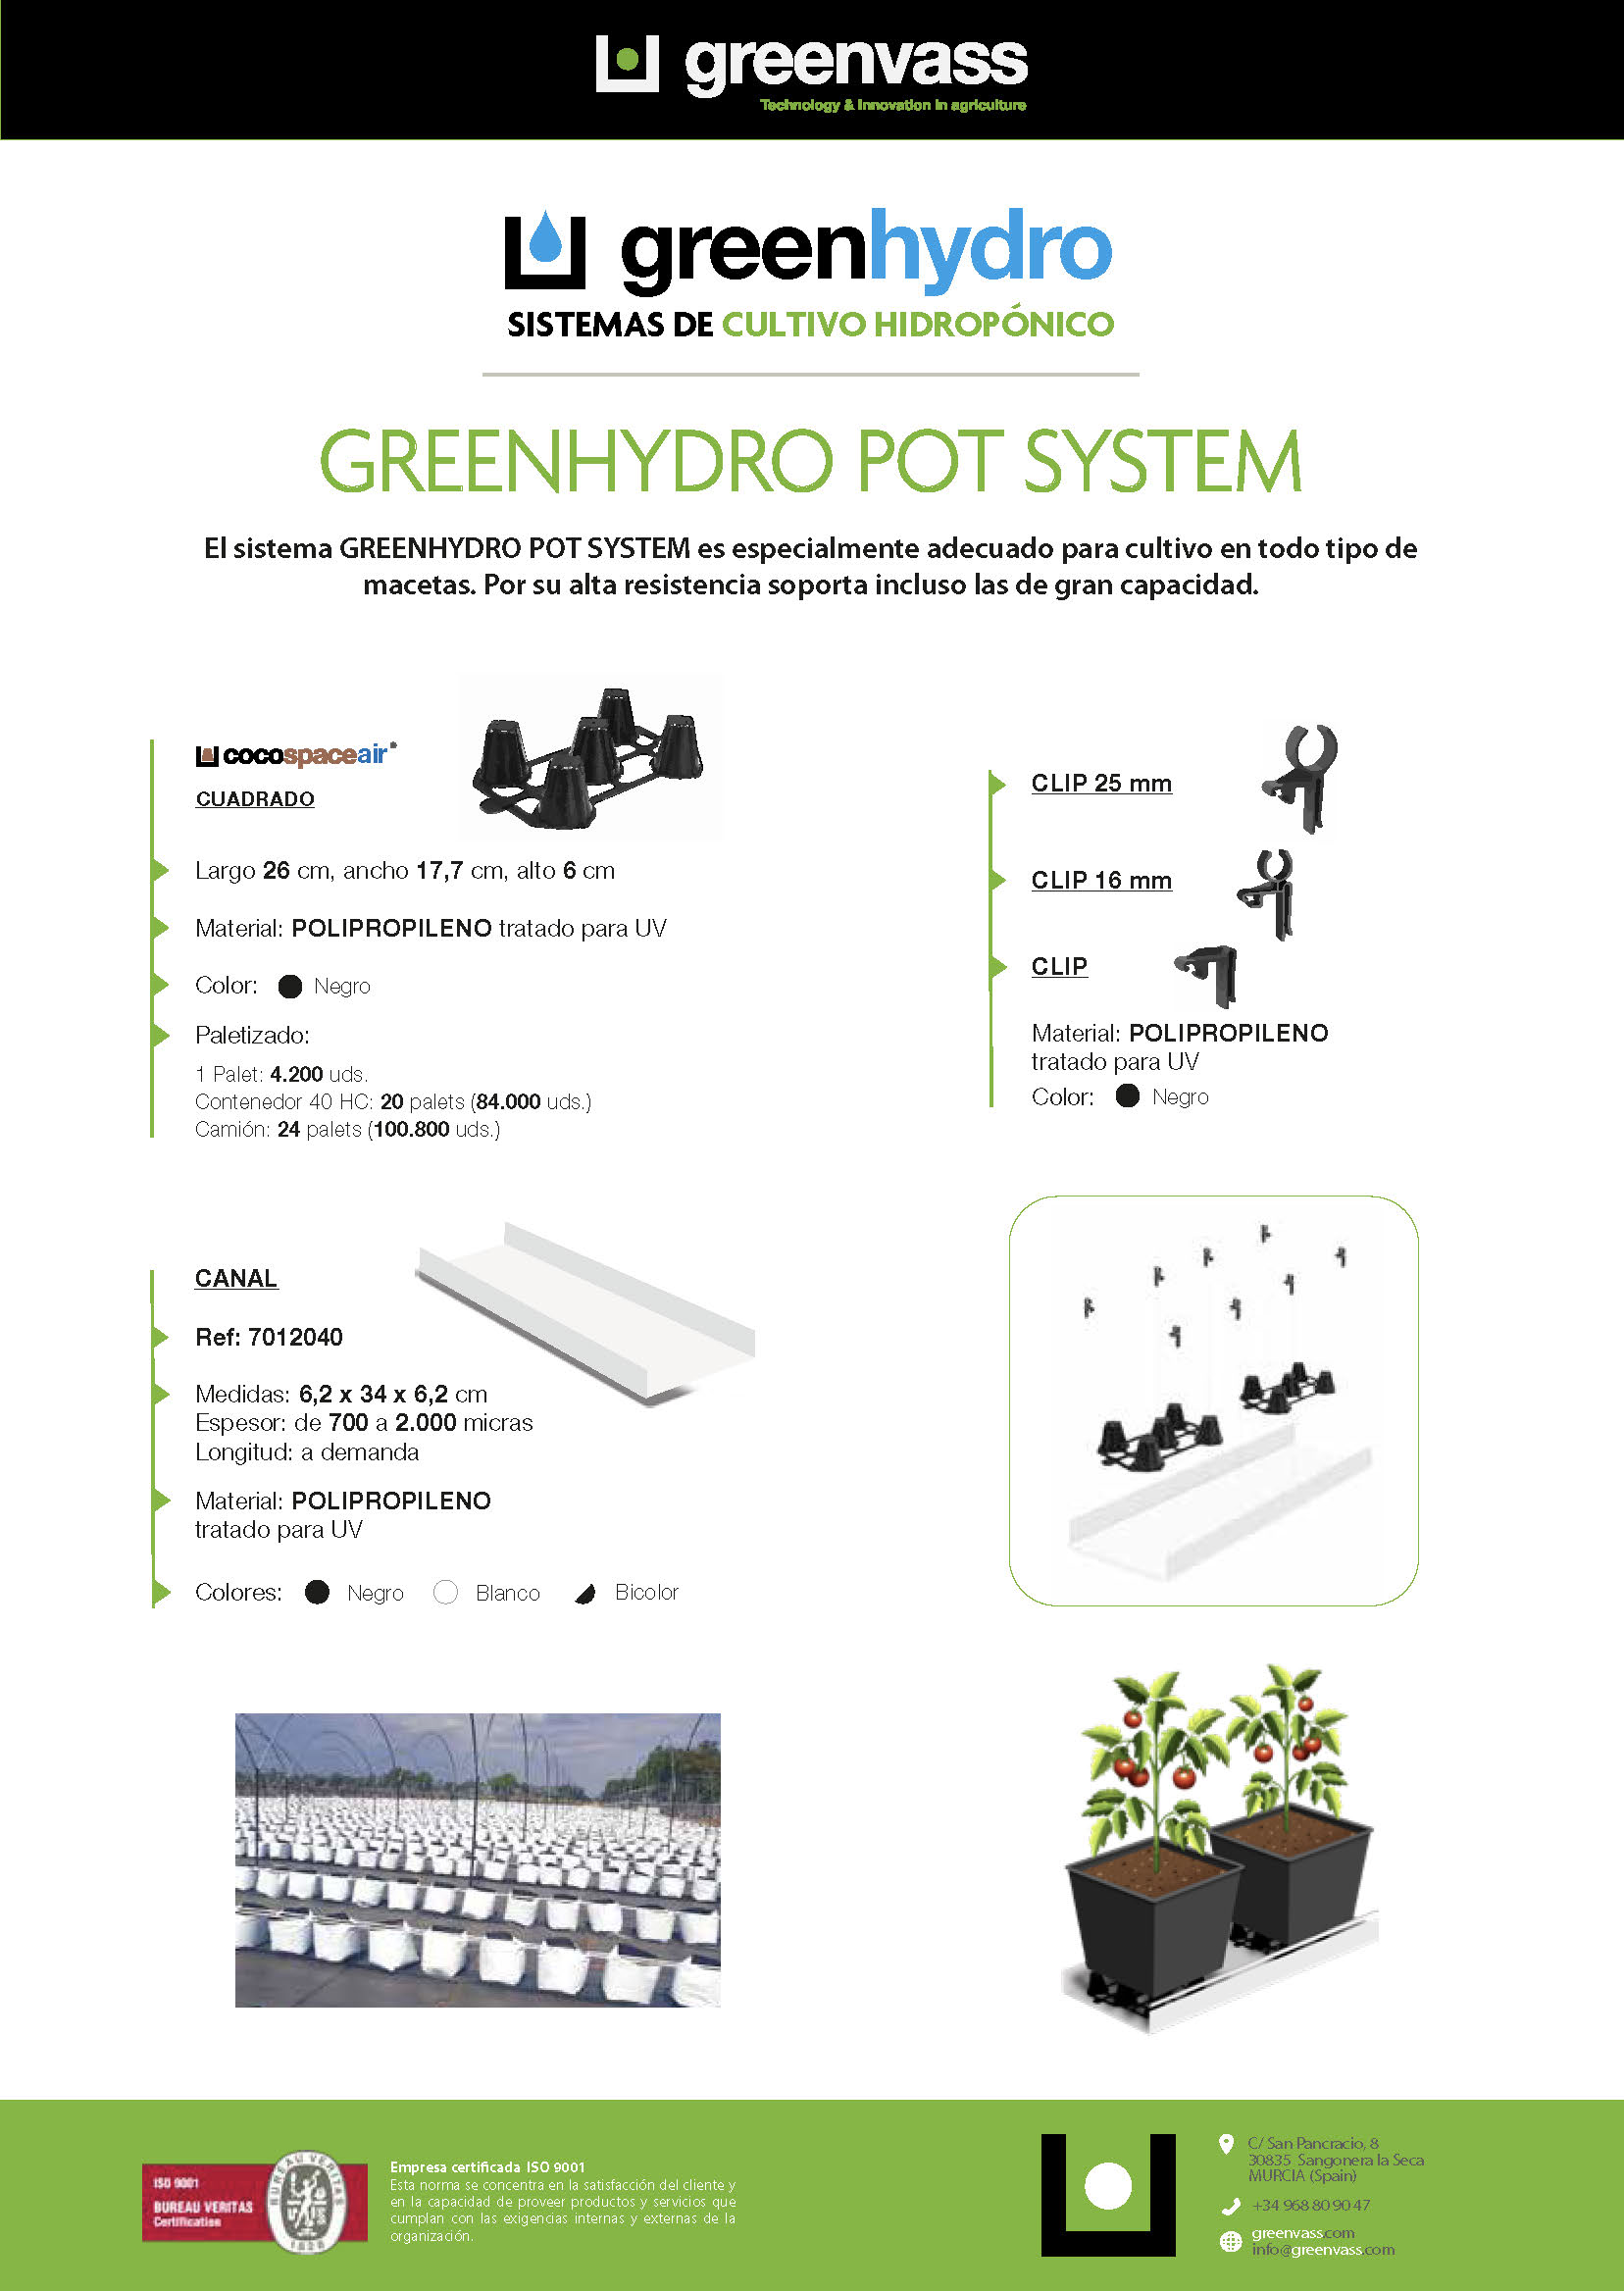 Greenhydro Pot System